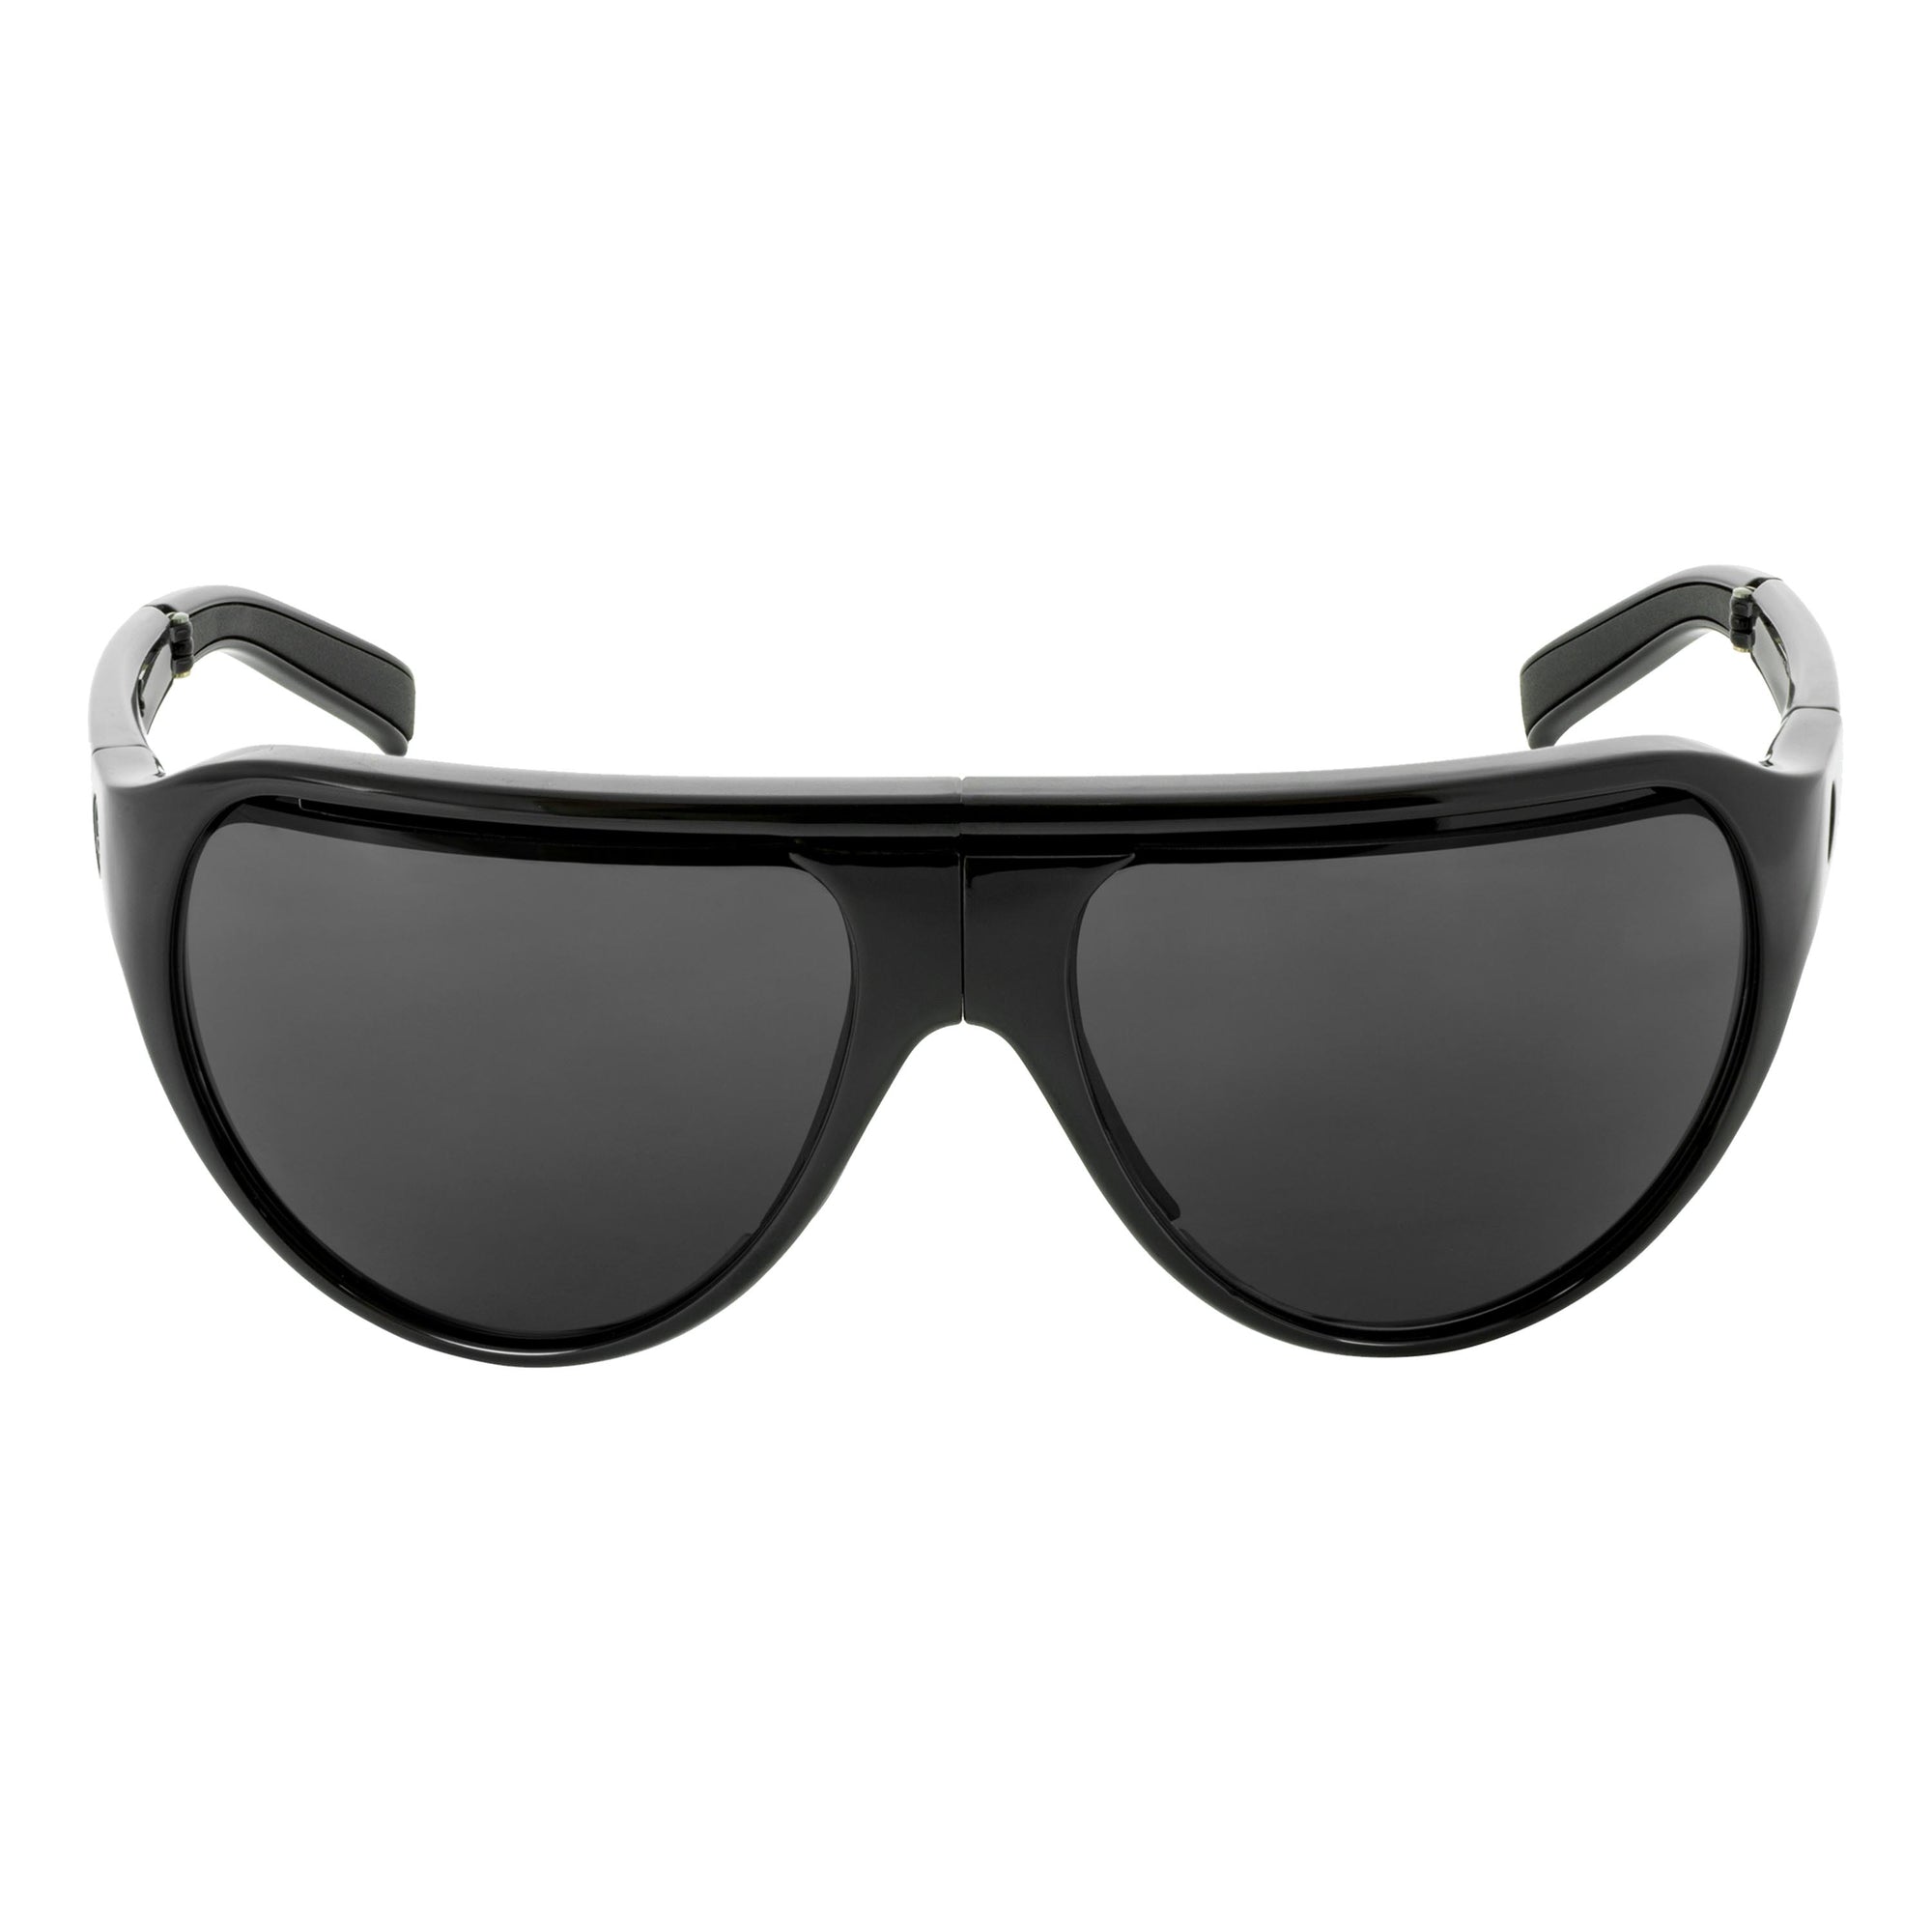 Popticals, Premium Compact Sunglasses, PopAir, 300010-BGGP, Polarized Sunglasses, Gloss Black Frame, Gray Lenses, Glam View